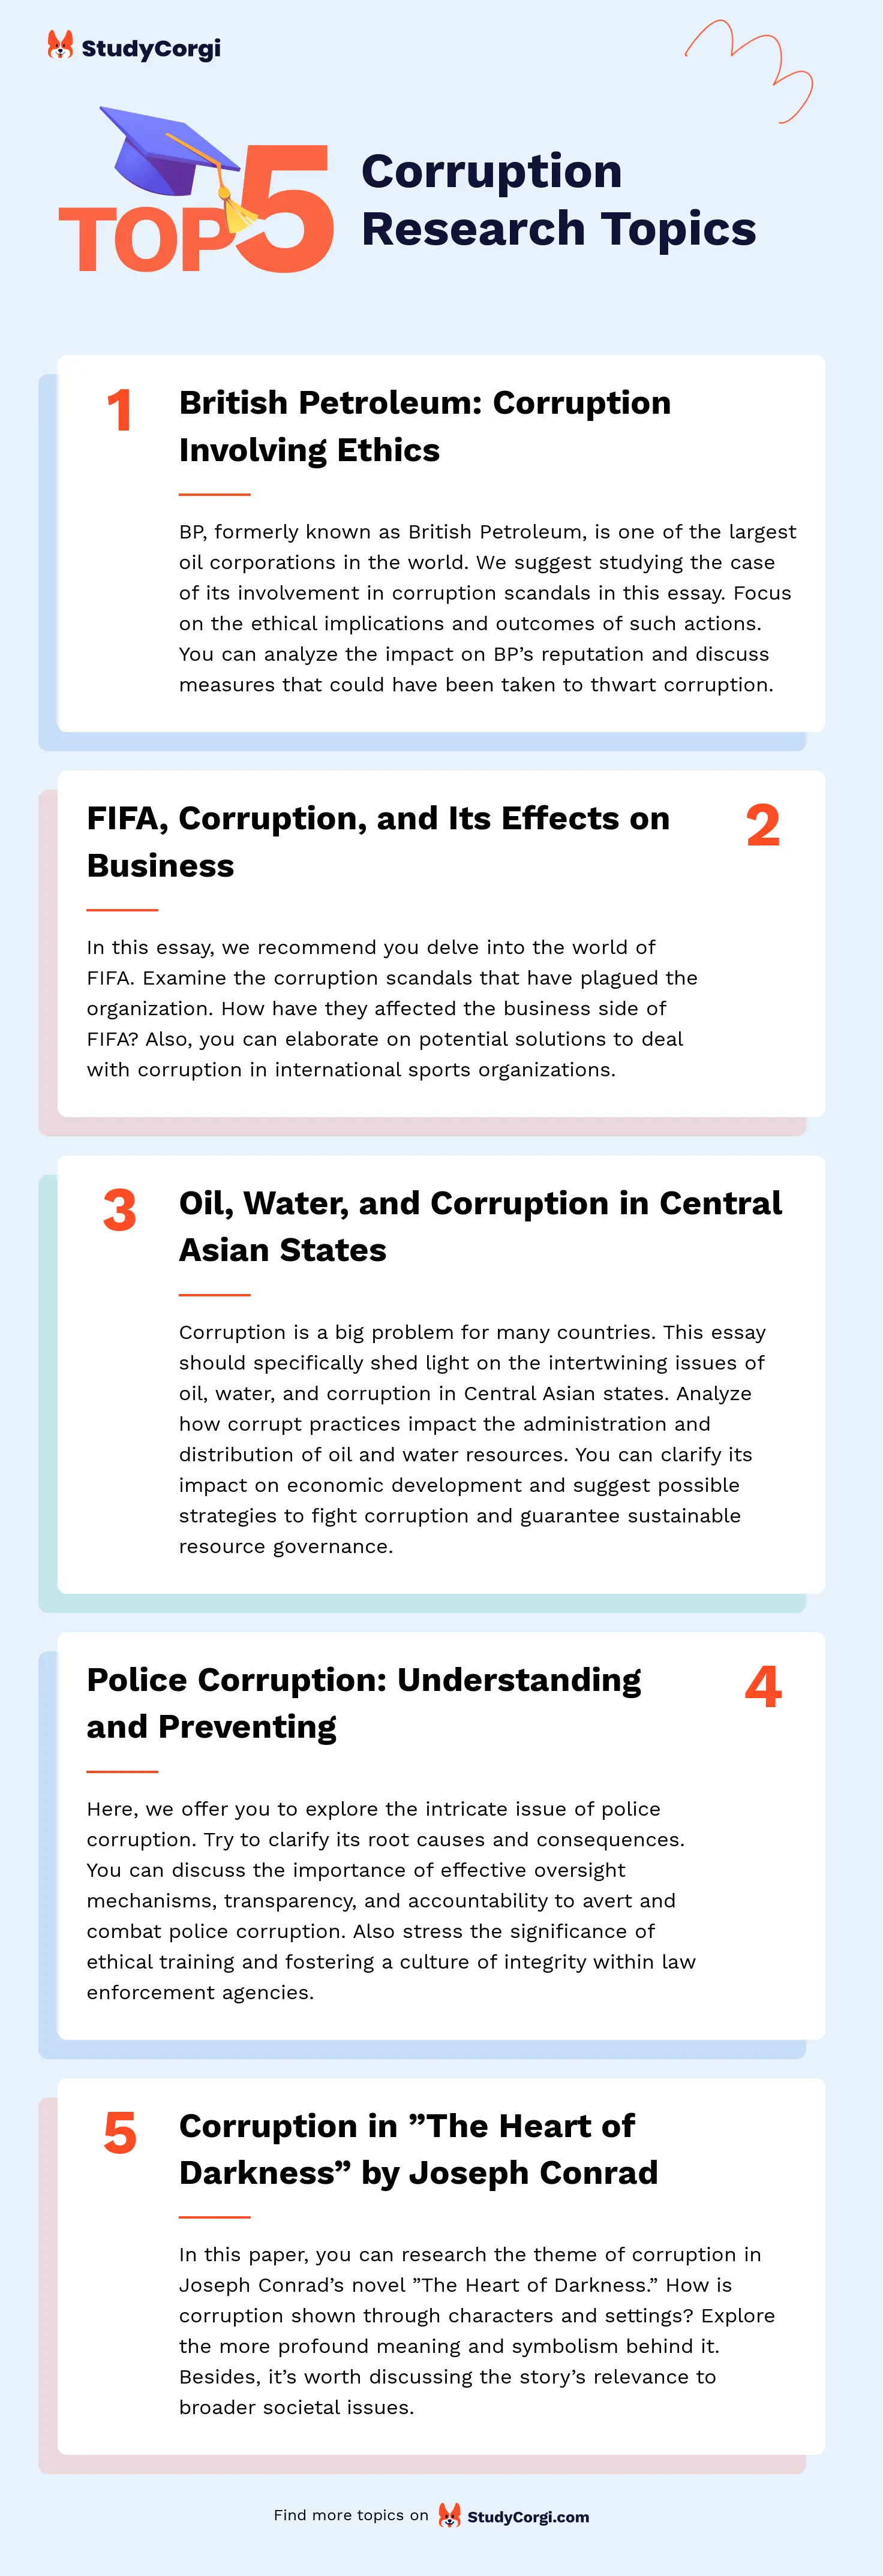 TOP-5 Corruption Research Topics